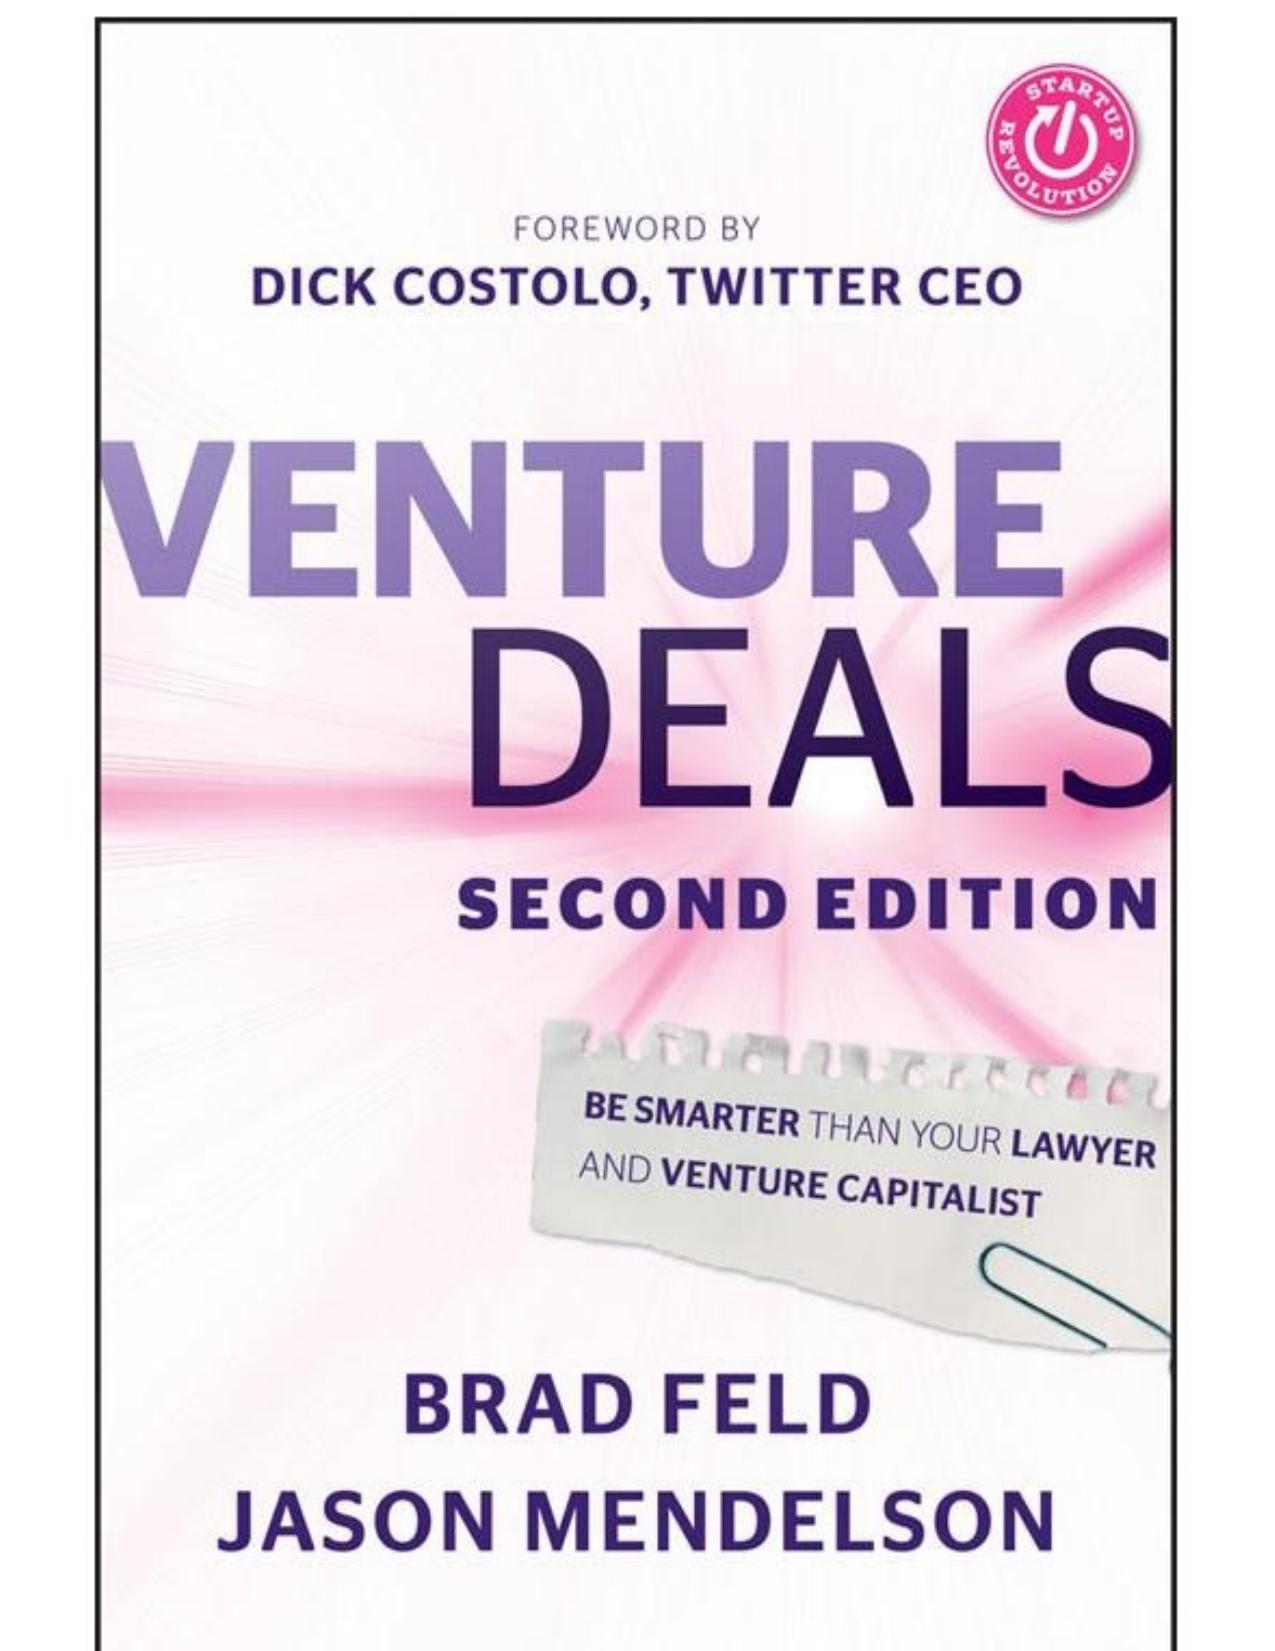 Venture Deals Be Smarter Than Your Lawyer and Venture Capitalist - Brad Feld & Jason Mendelson.jpg